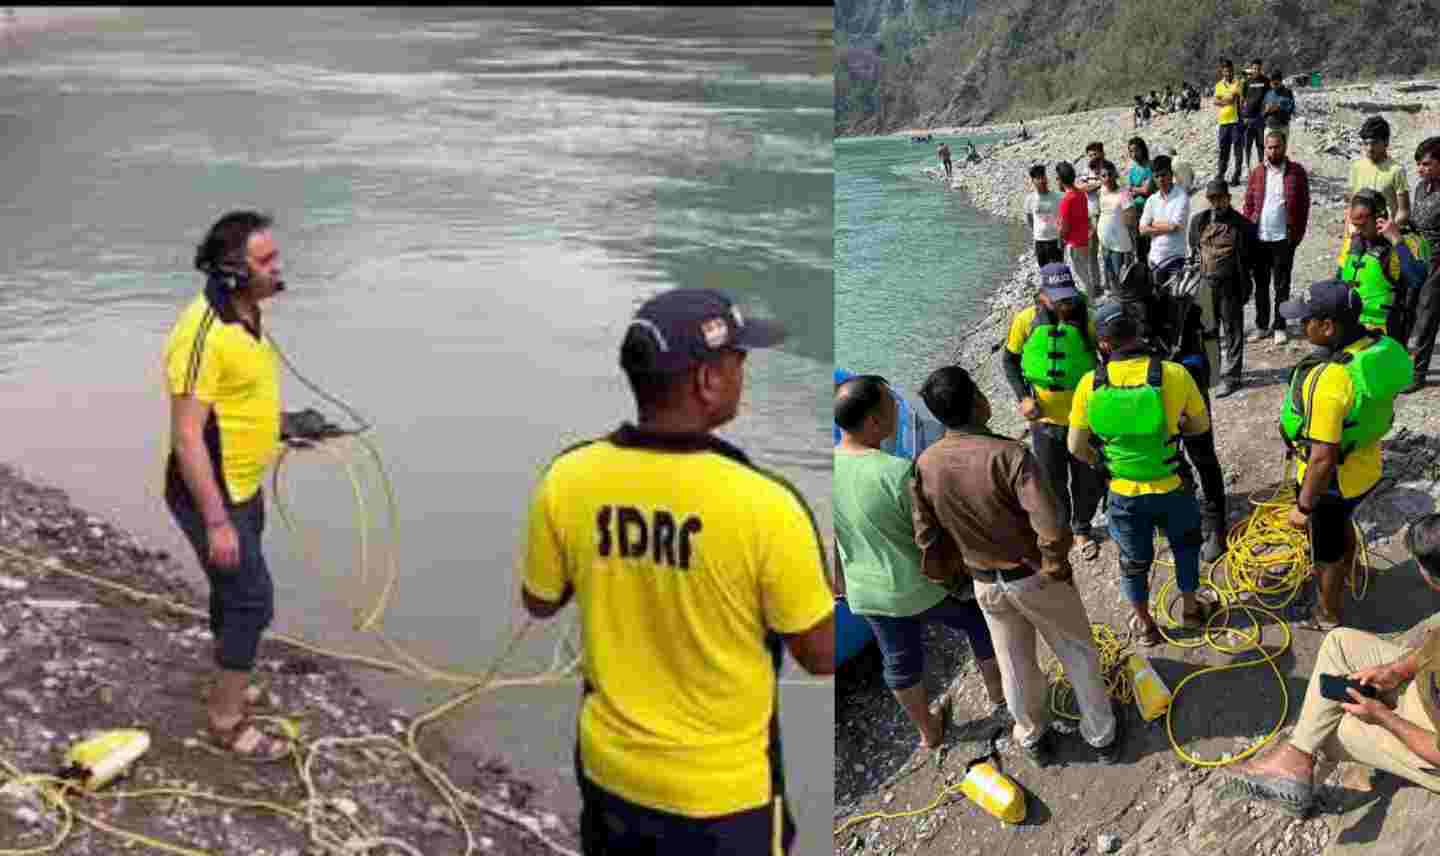 Uttarakhand: Two B.Tech students drowning in the ganga river rishikesh no news yet. Rishikesh Ganga drowning news